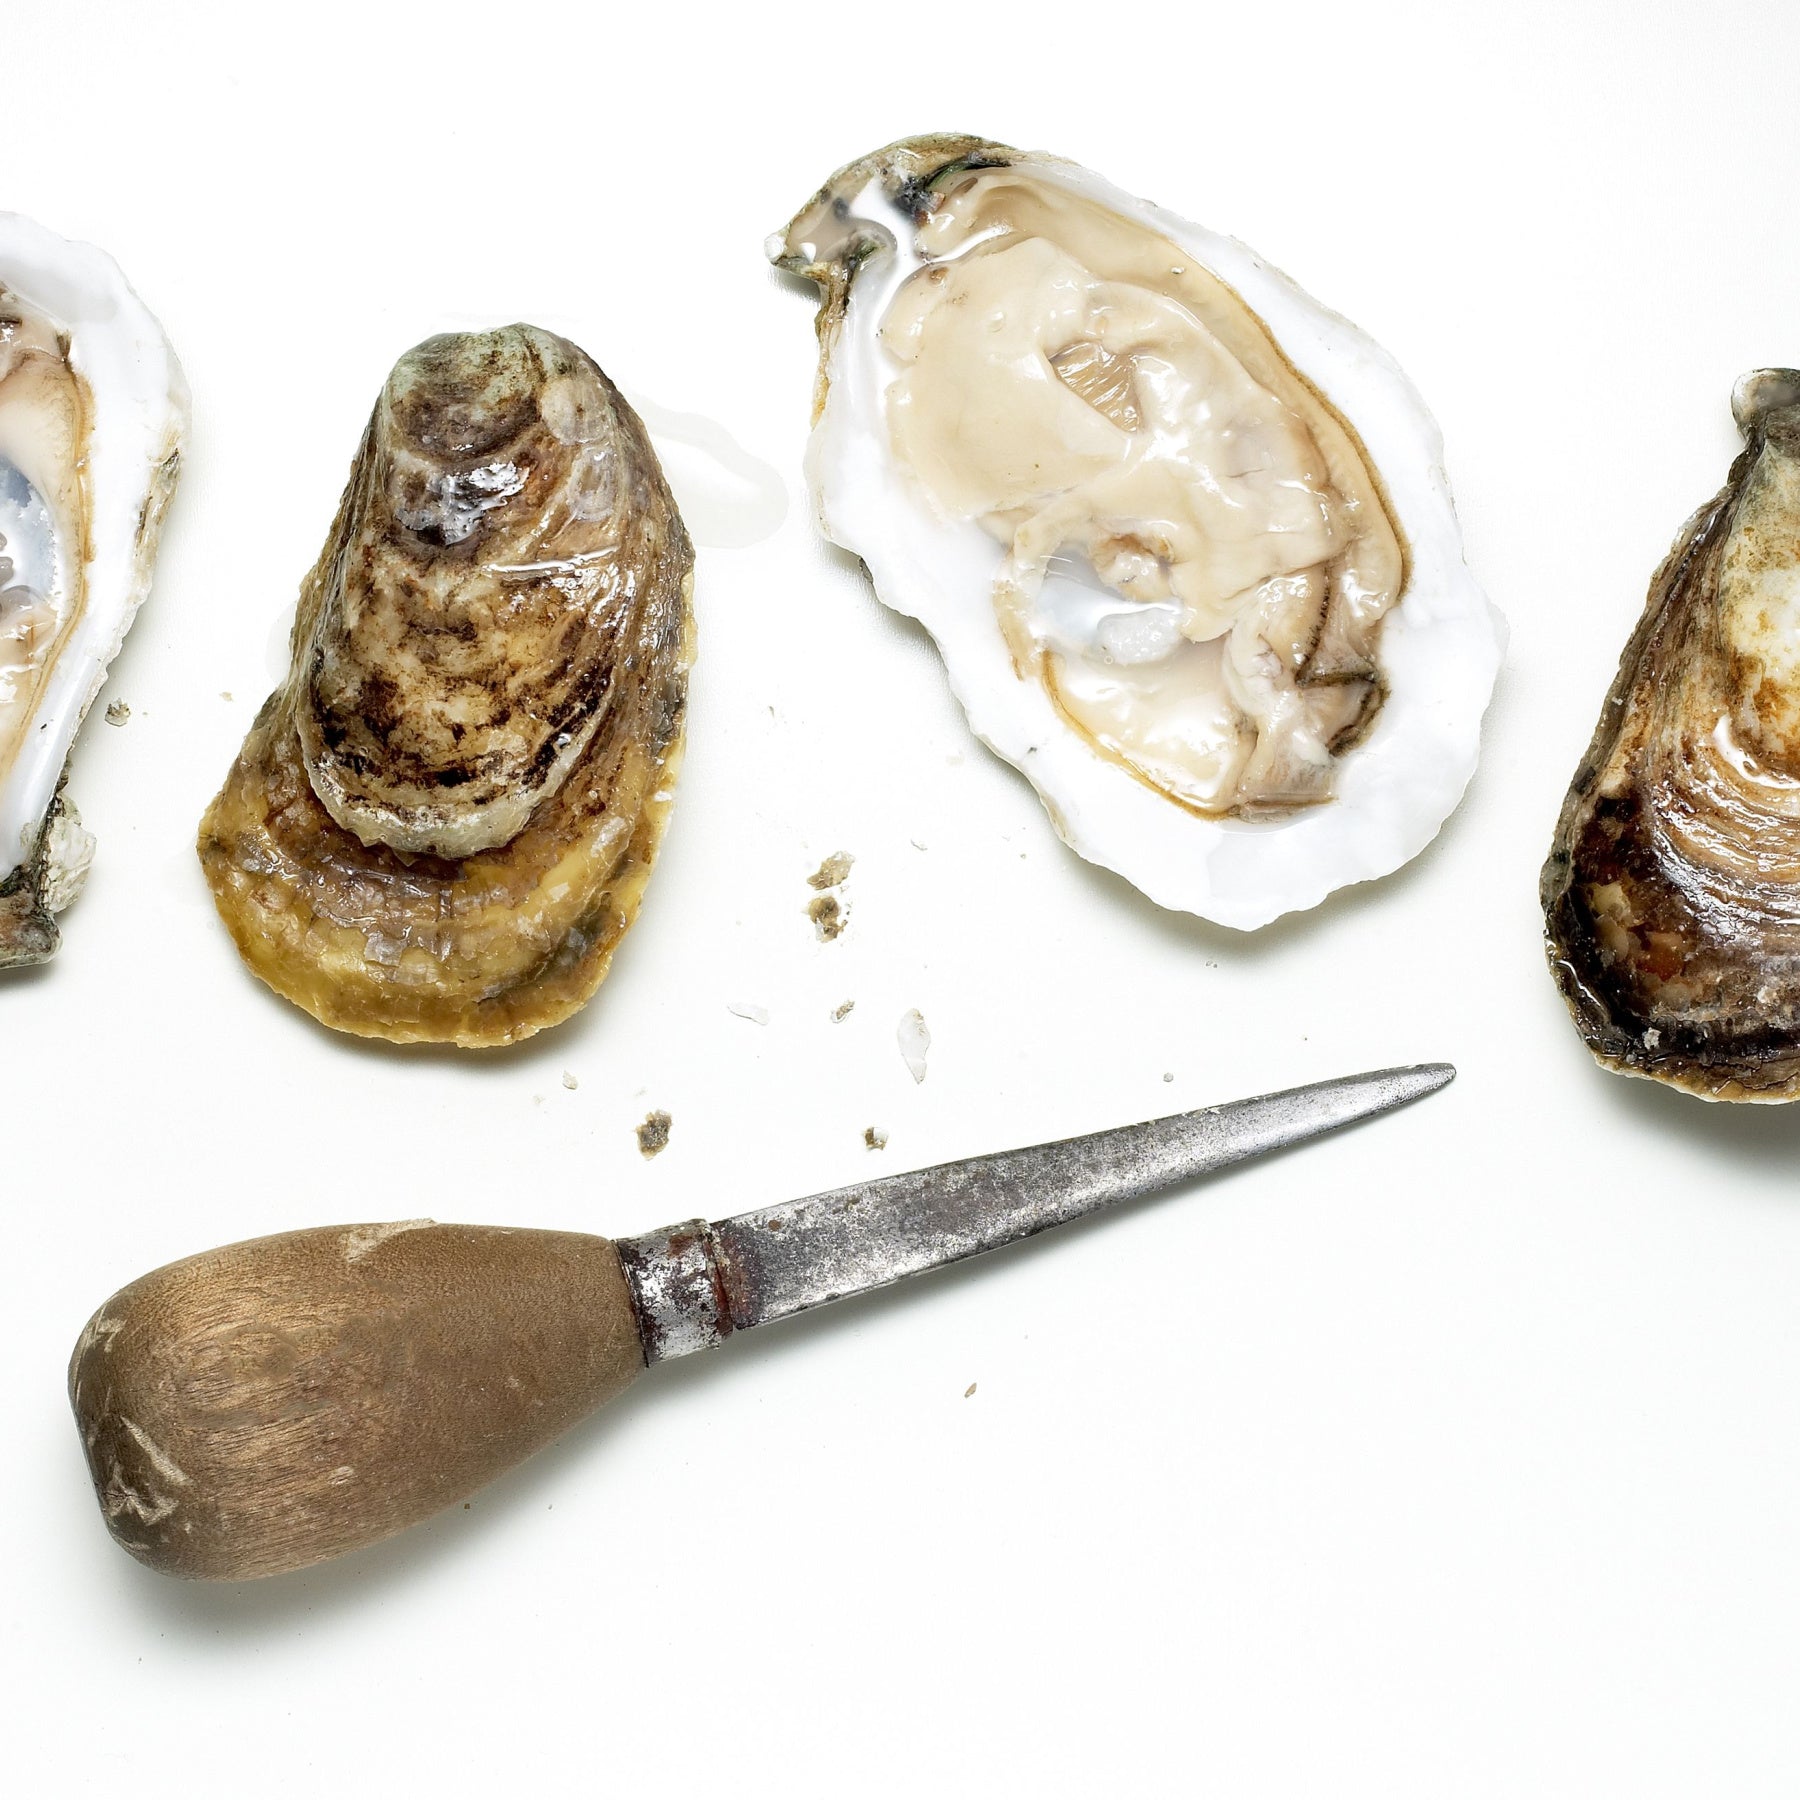 Chesapeake Bay Oysters